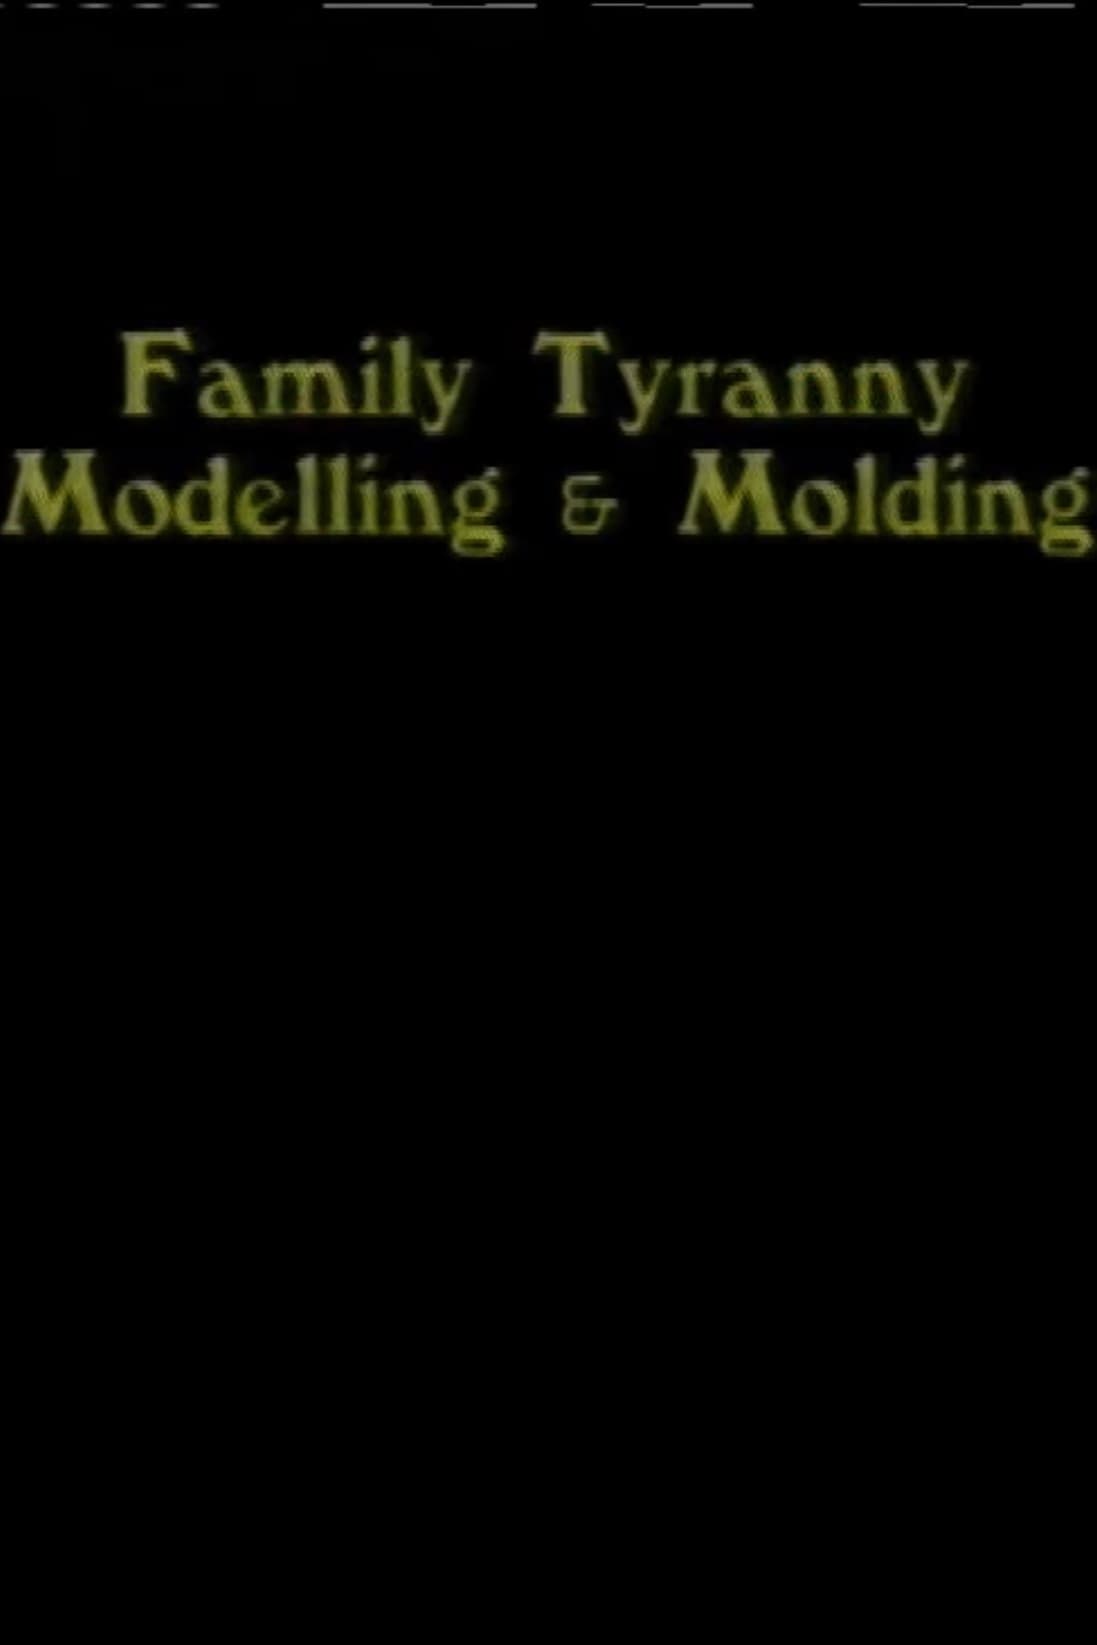 Family Tyranny (Modeling and Molding)